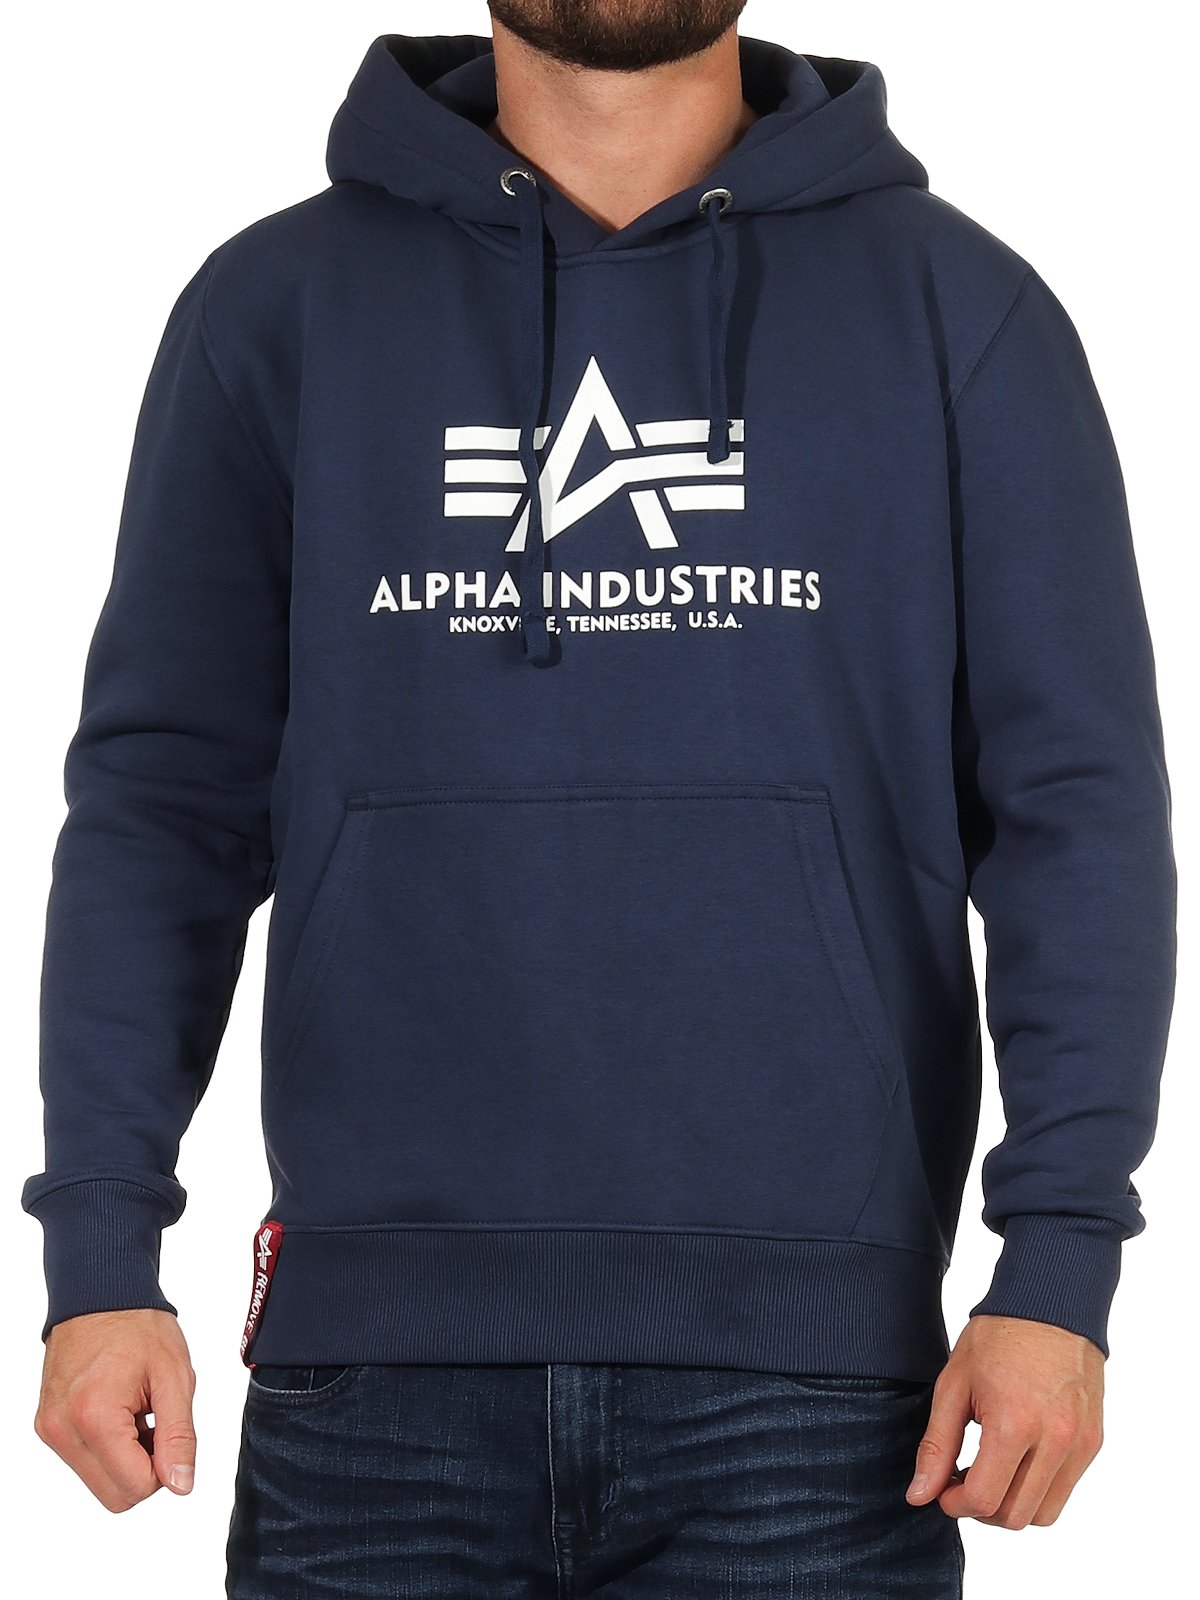 Hoody Hoodie Sport Basic eBay Alpha Pullover | 178312 Industries Sweatshirt Herren